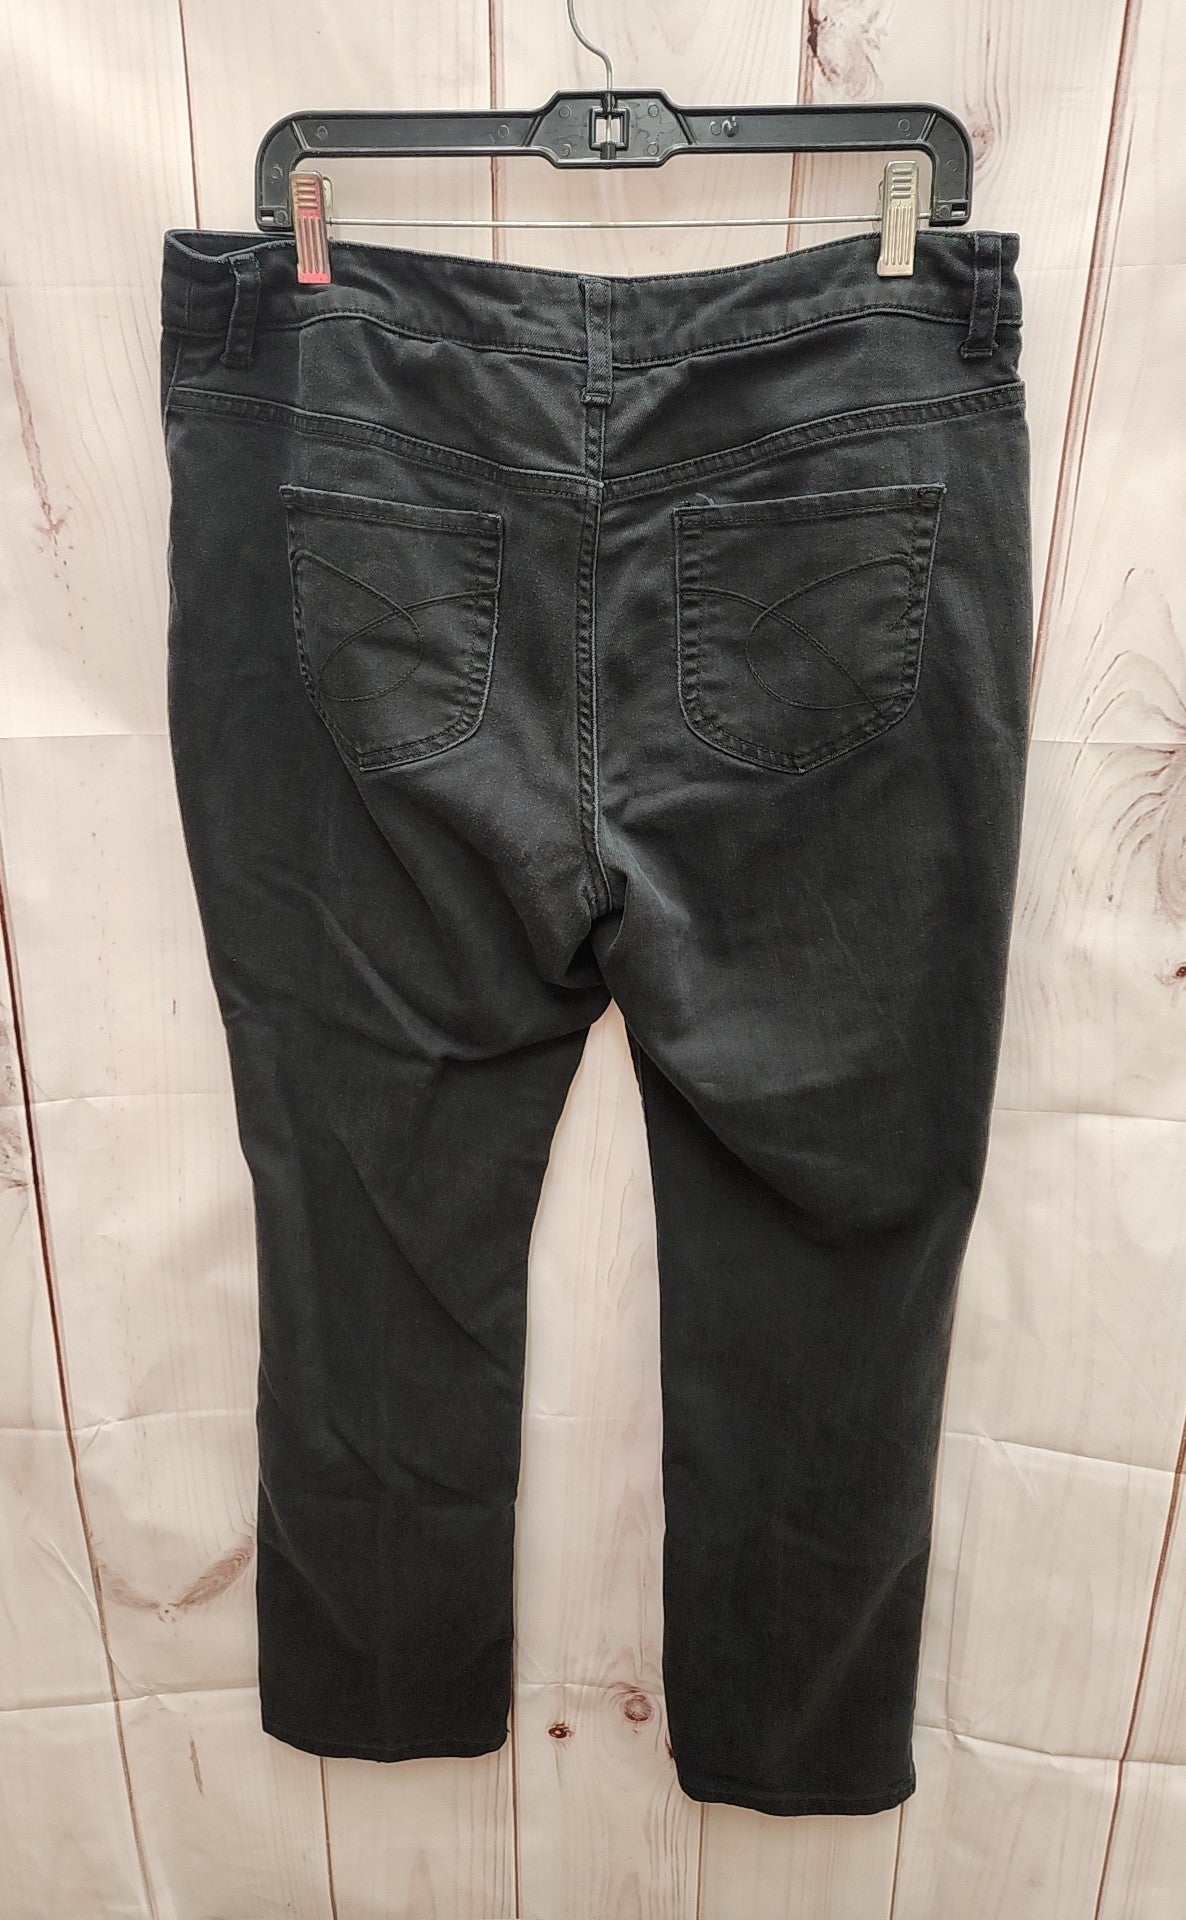 Chico's Women's Size 30 (9-10) Black Jeans